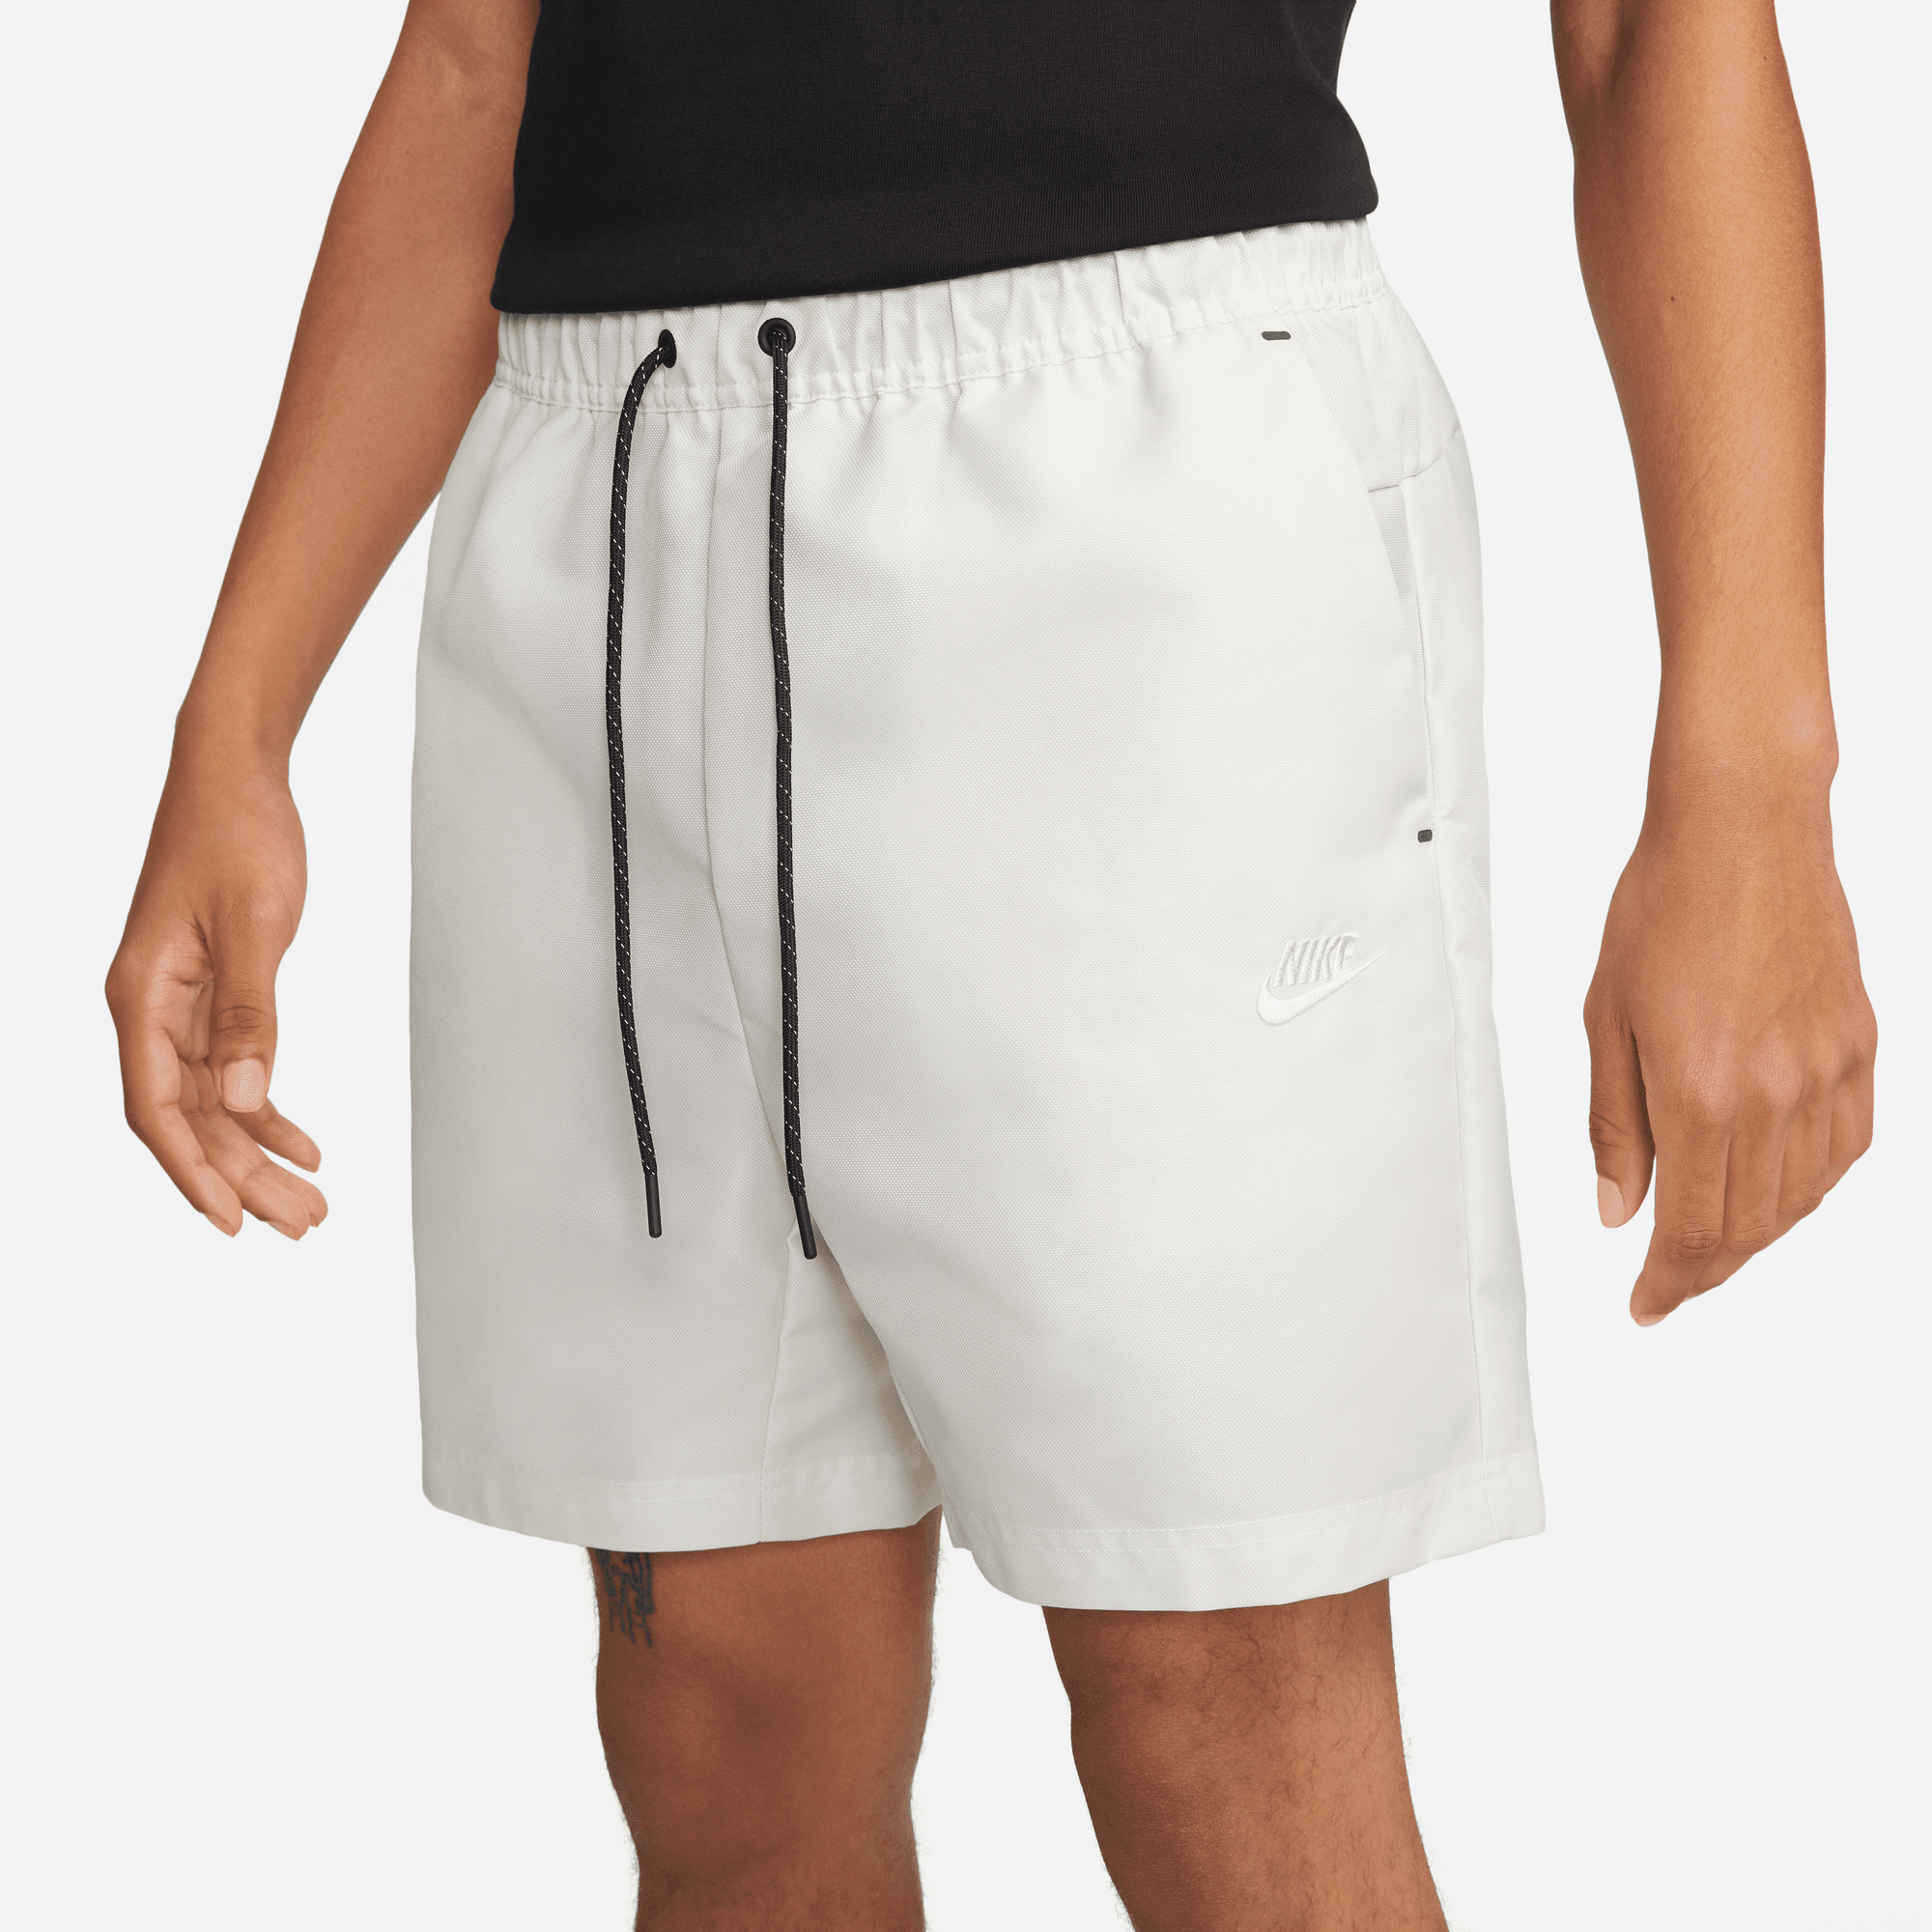 Nike fleece shorts in white